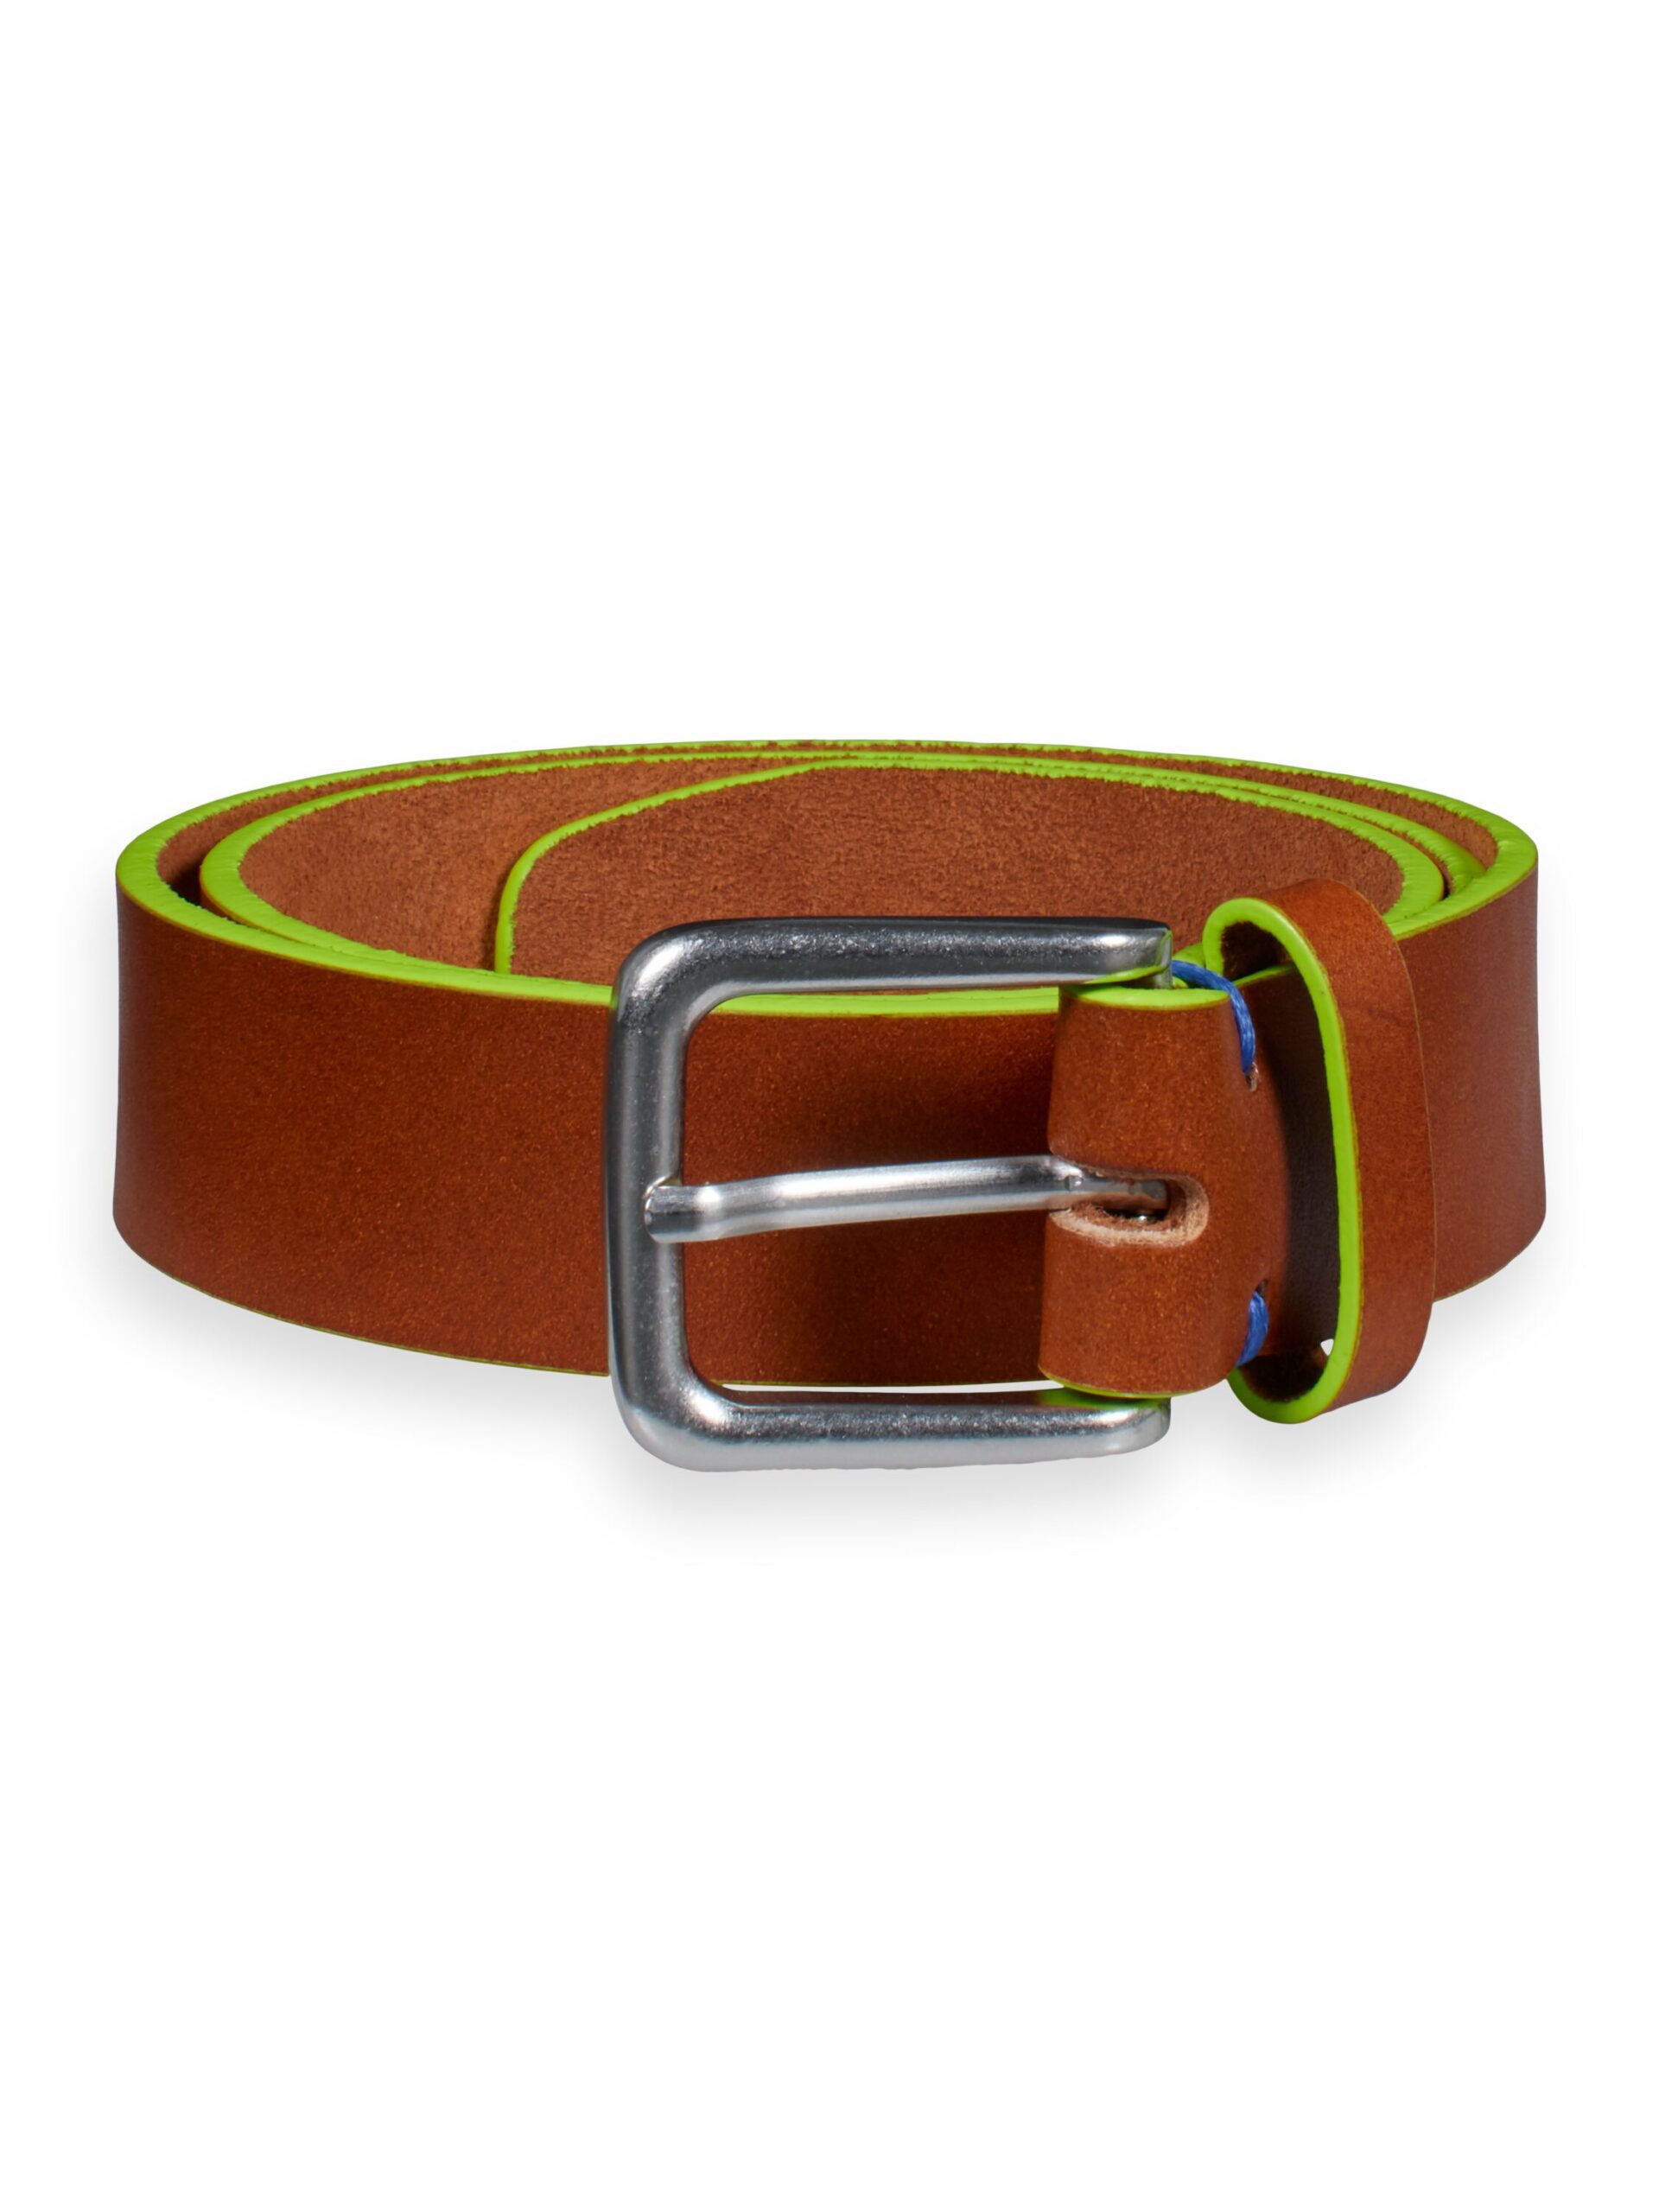 Scotch Shrunk Leather Belt - BREEZYKIDZ